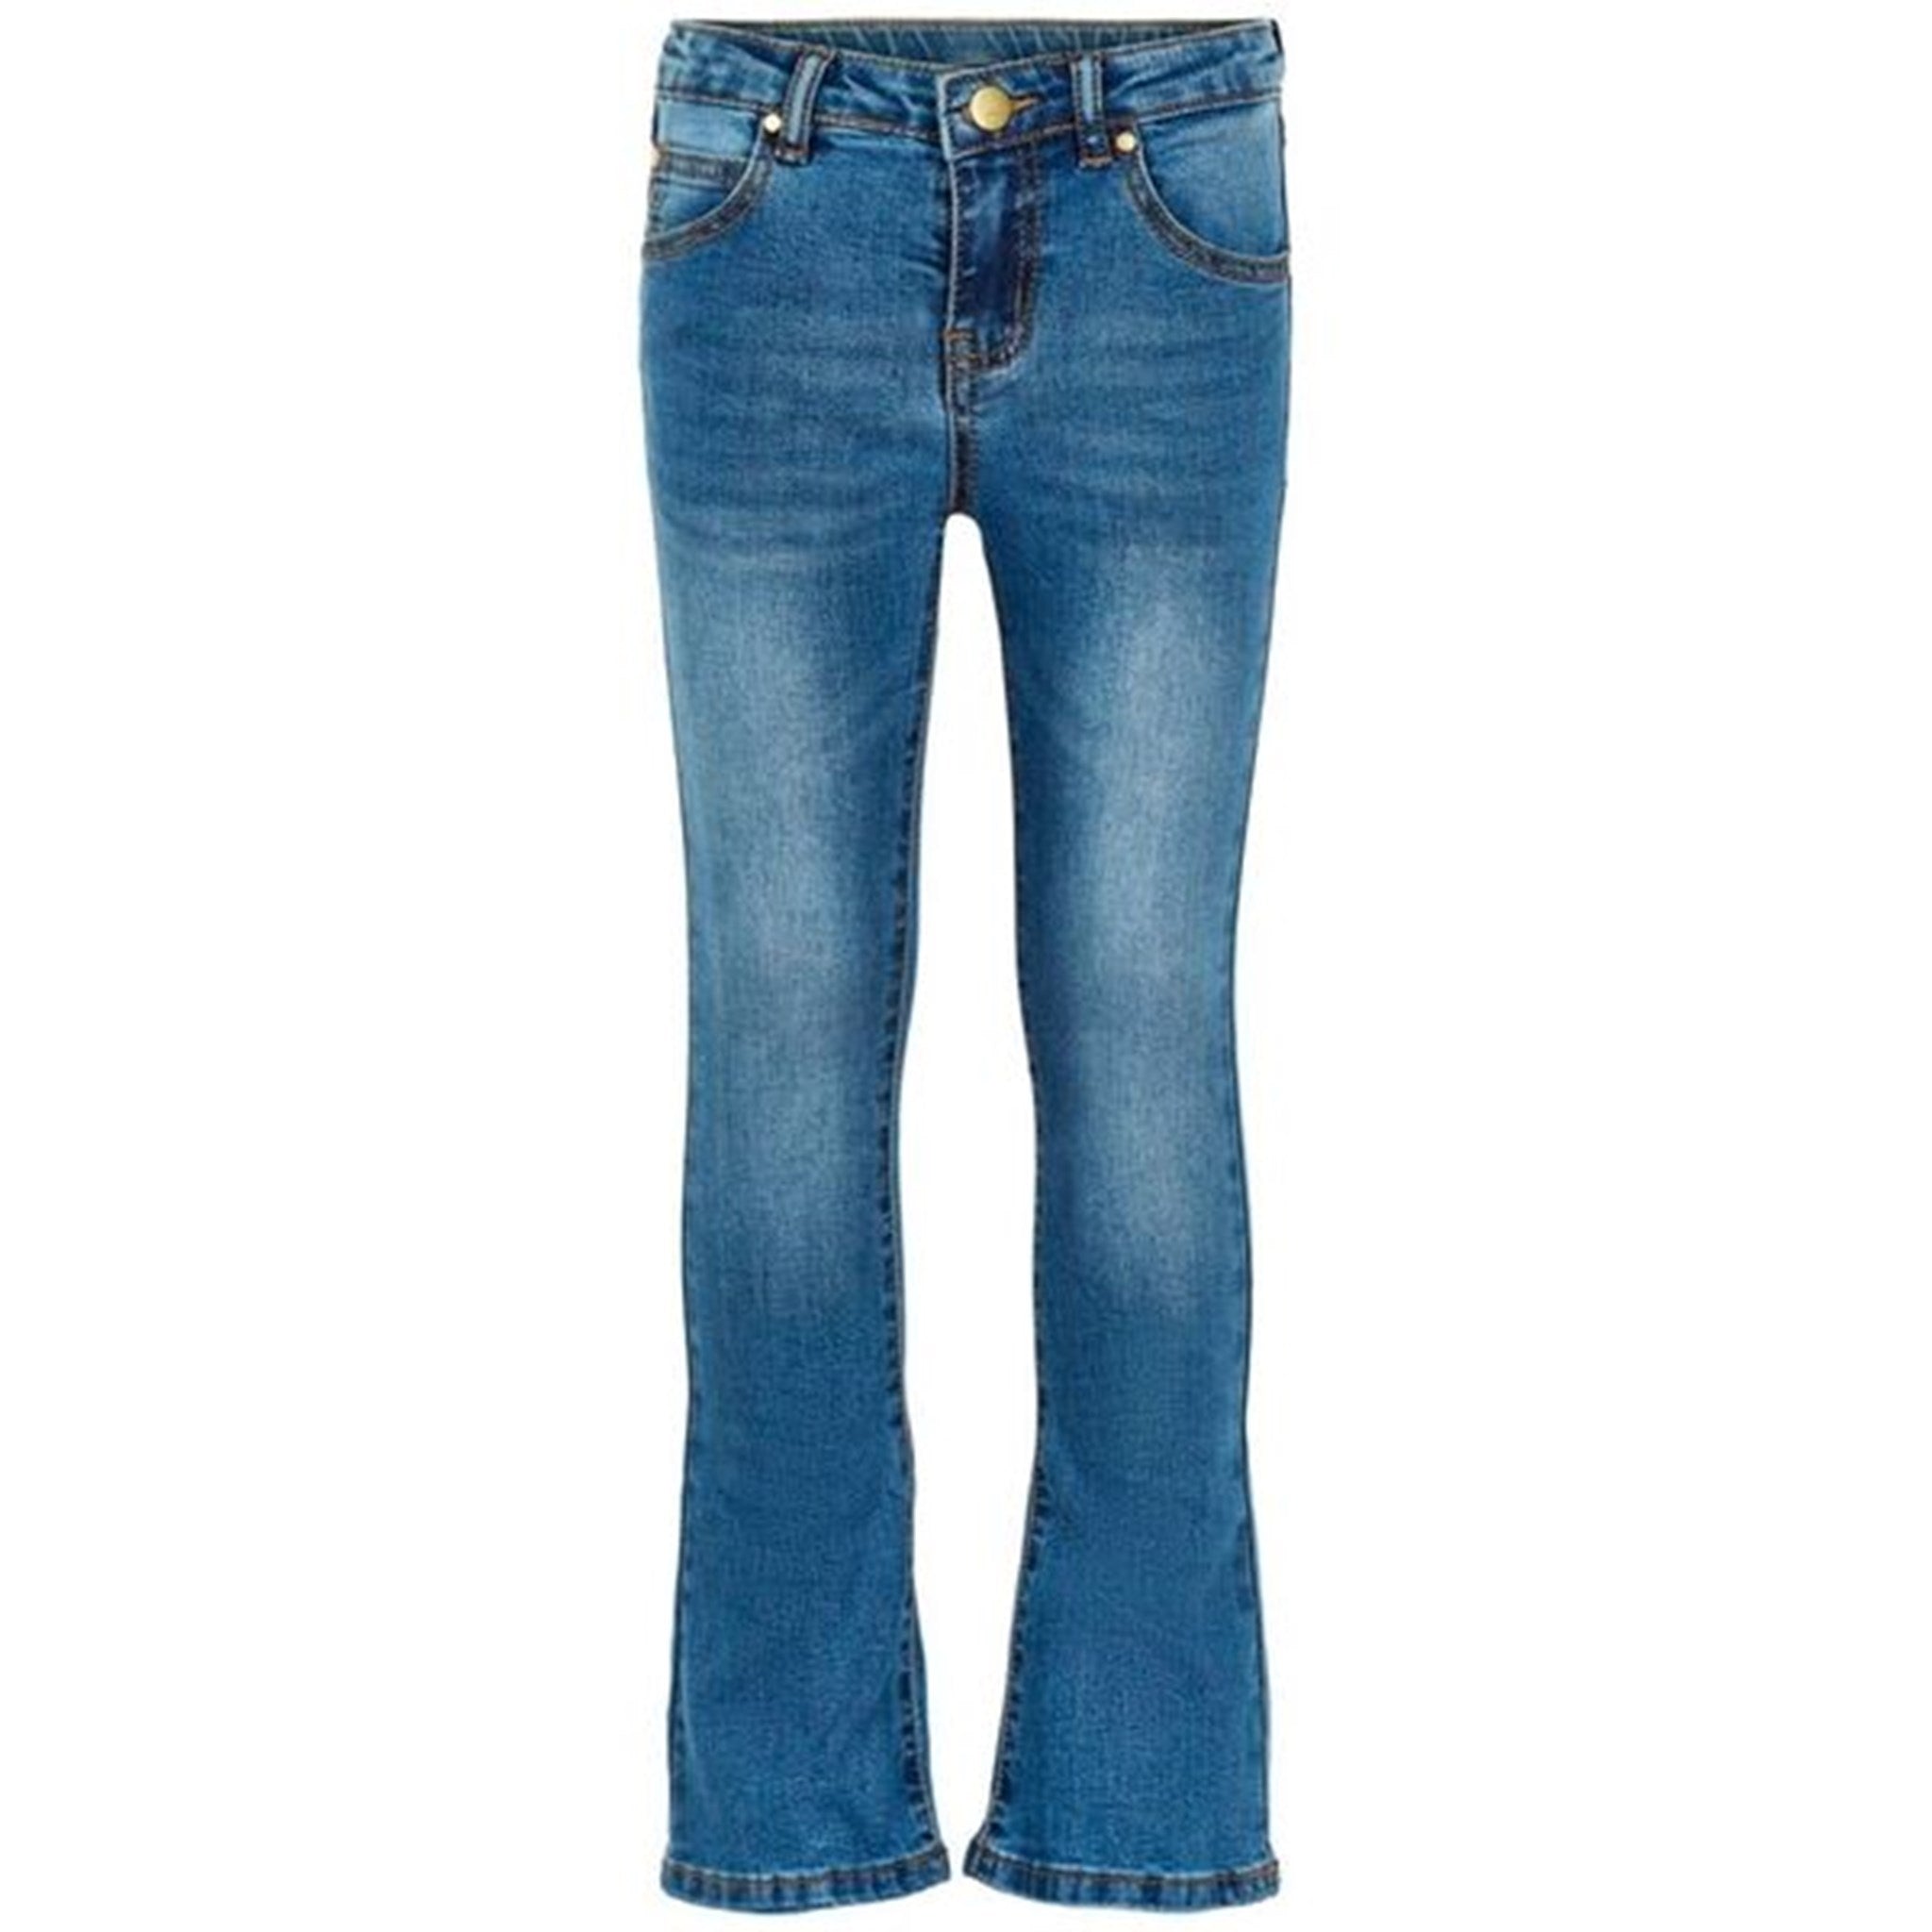 The New Flared Jeans Dark Blue Denim